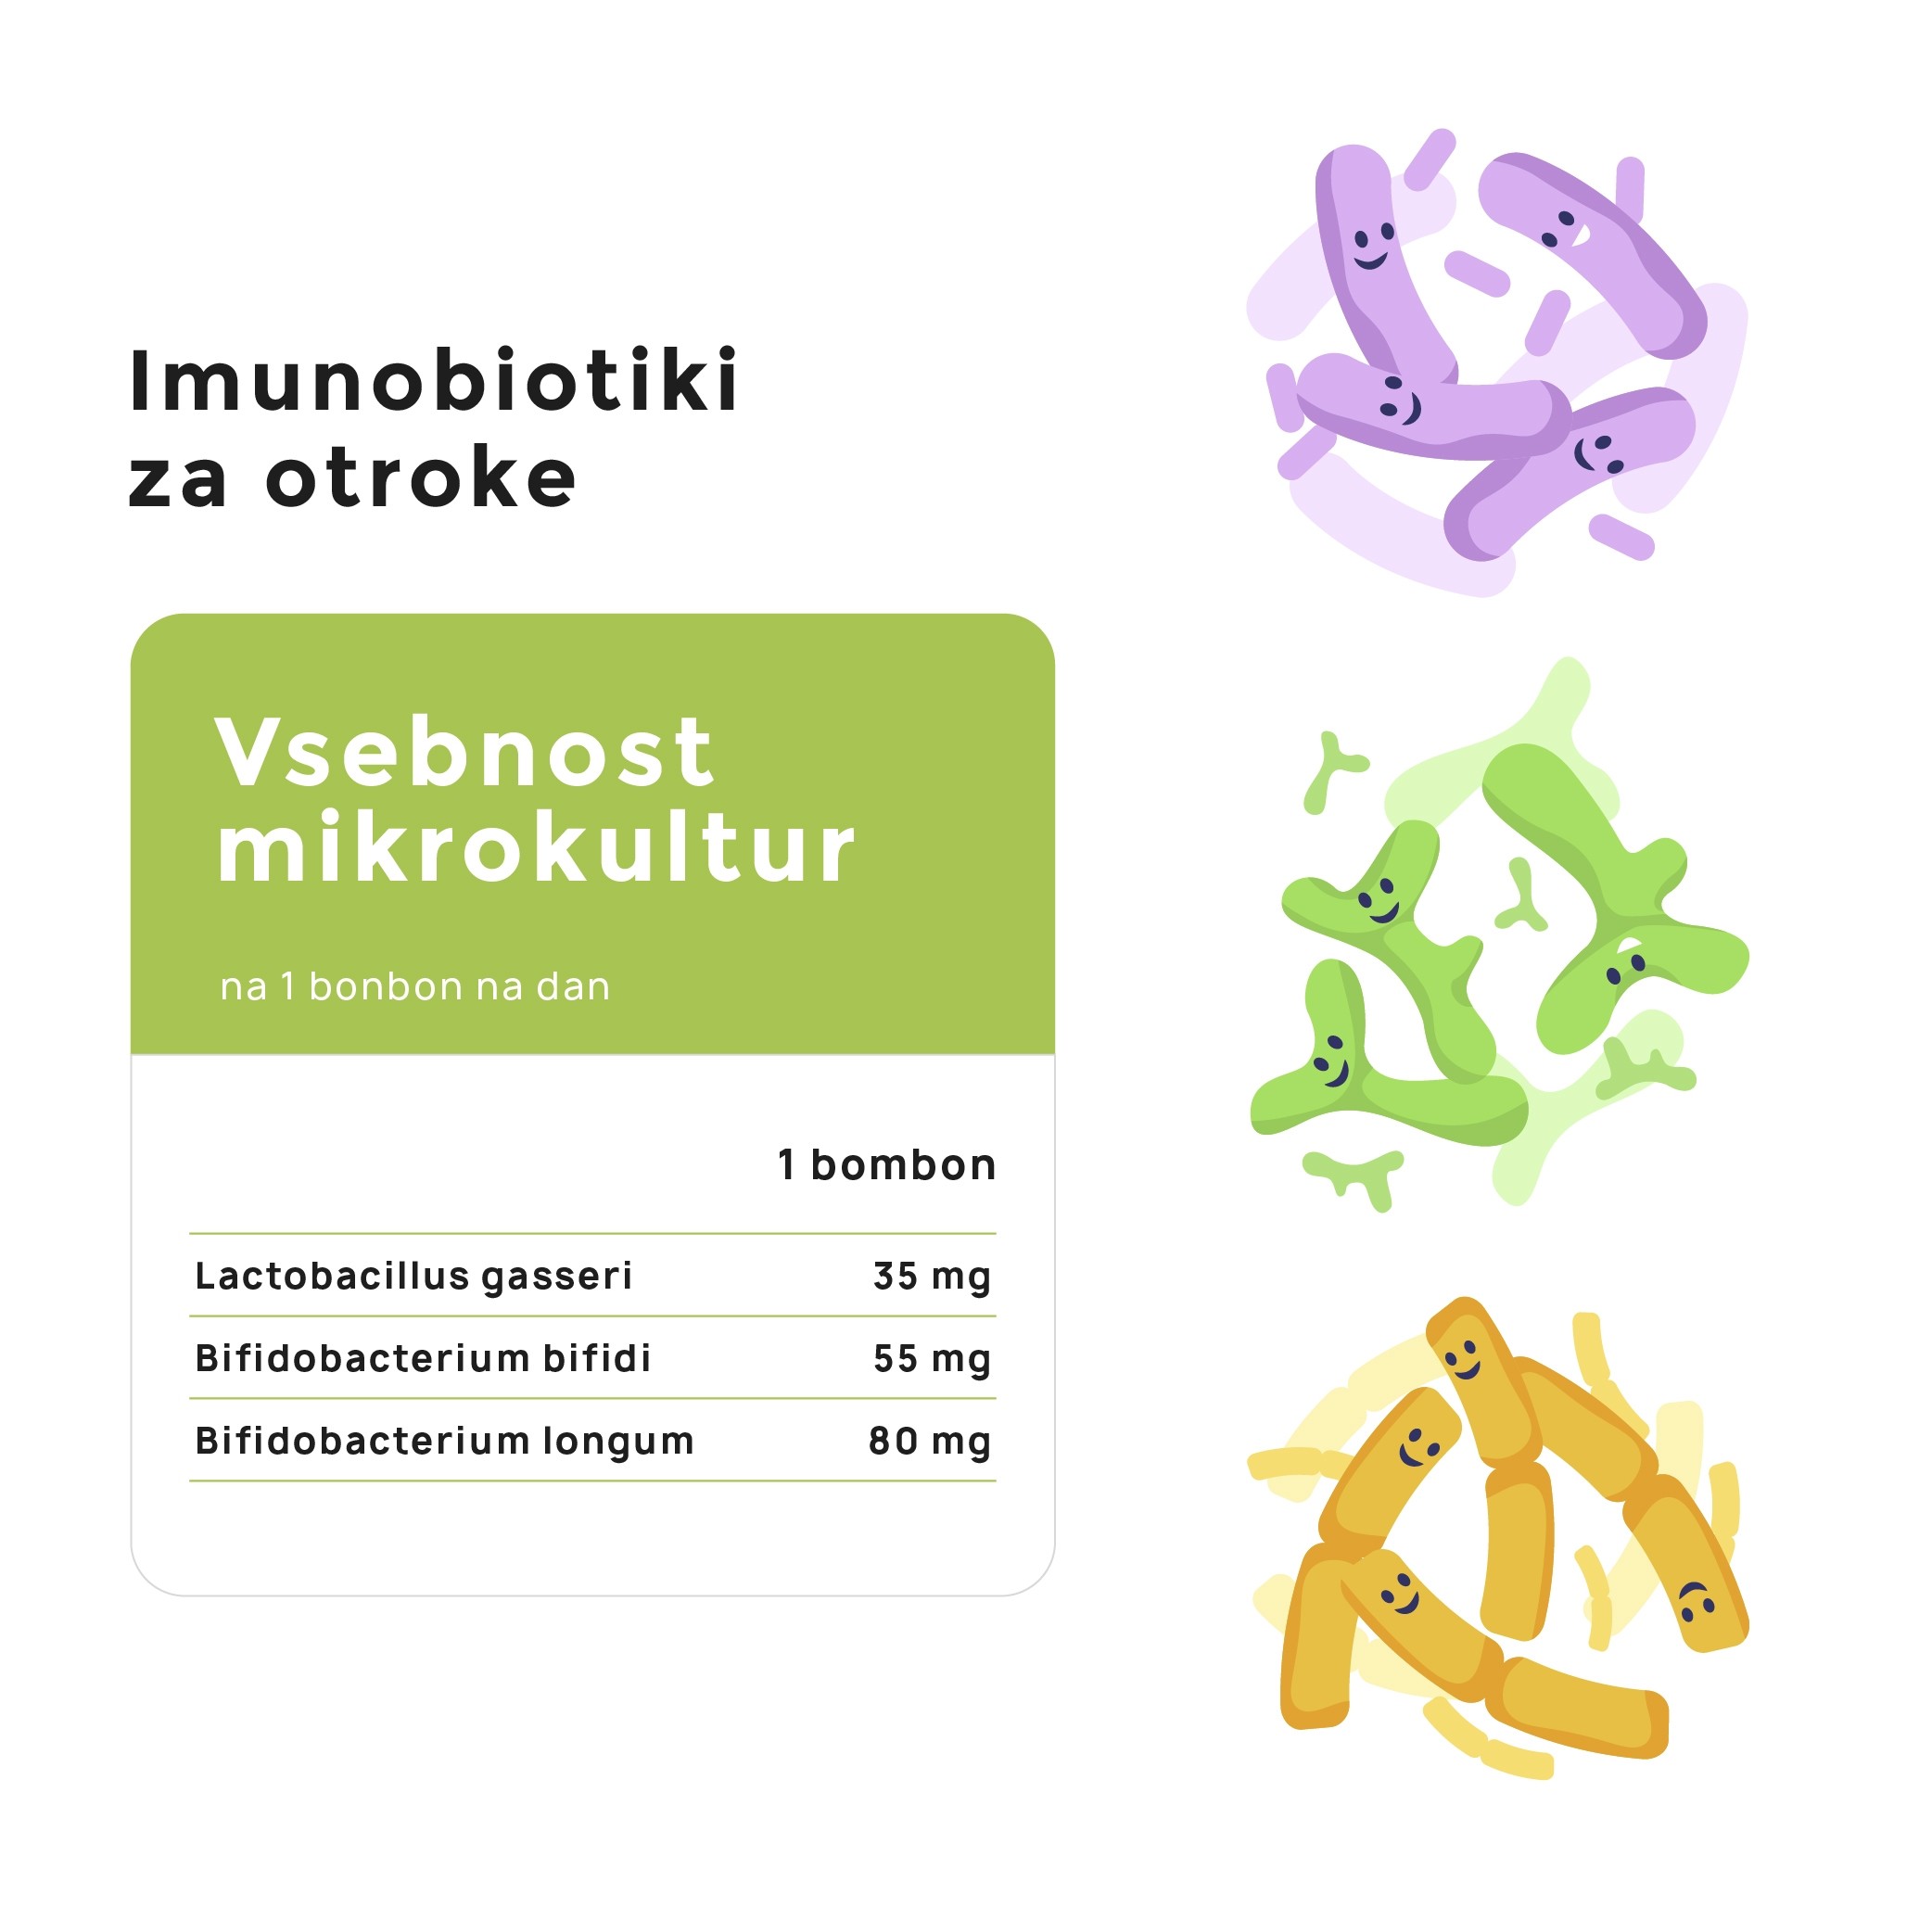 Imunobiotiki za otroke - sestava